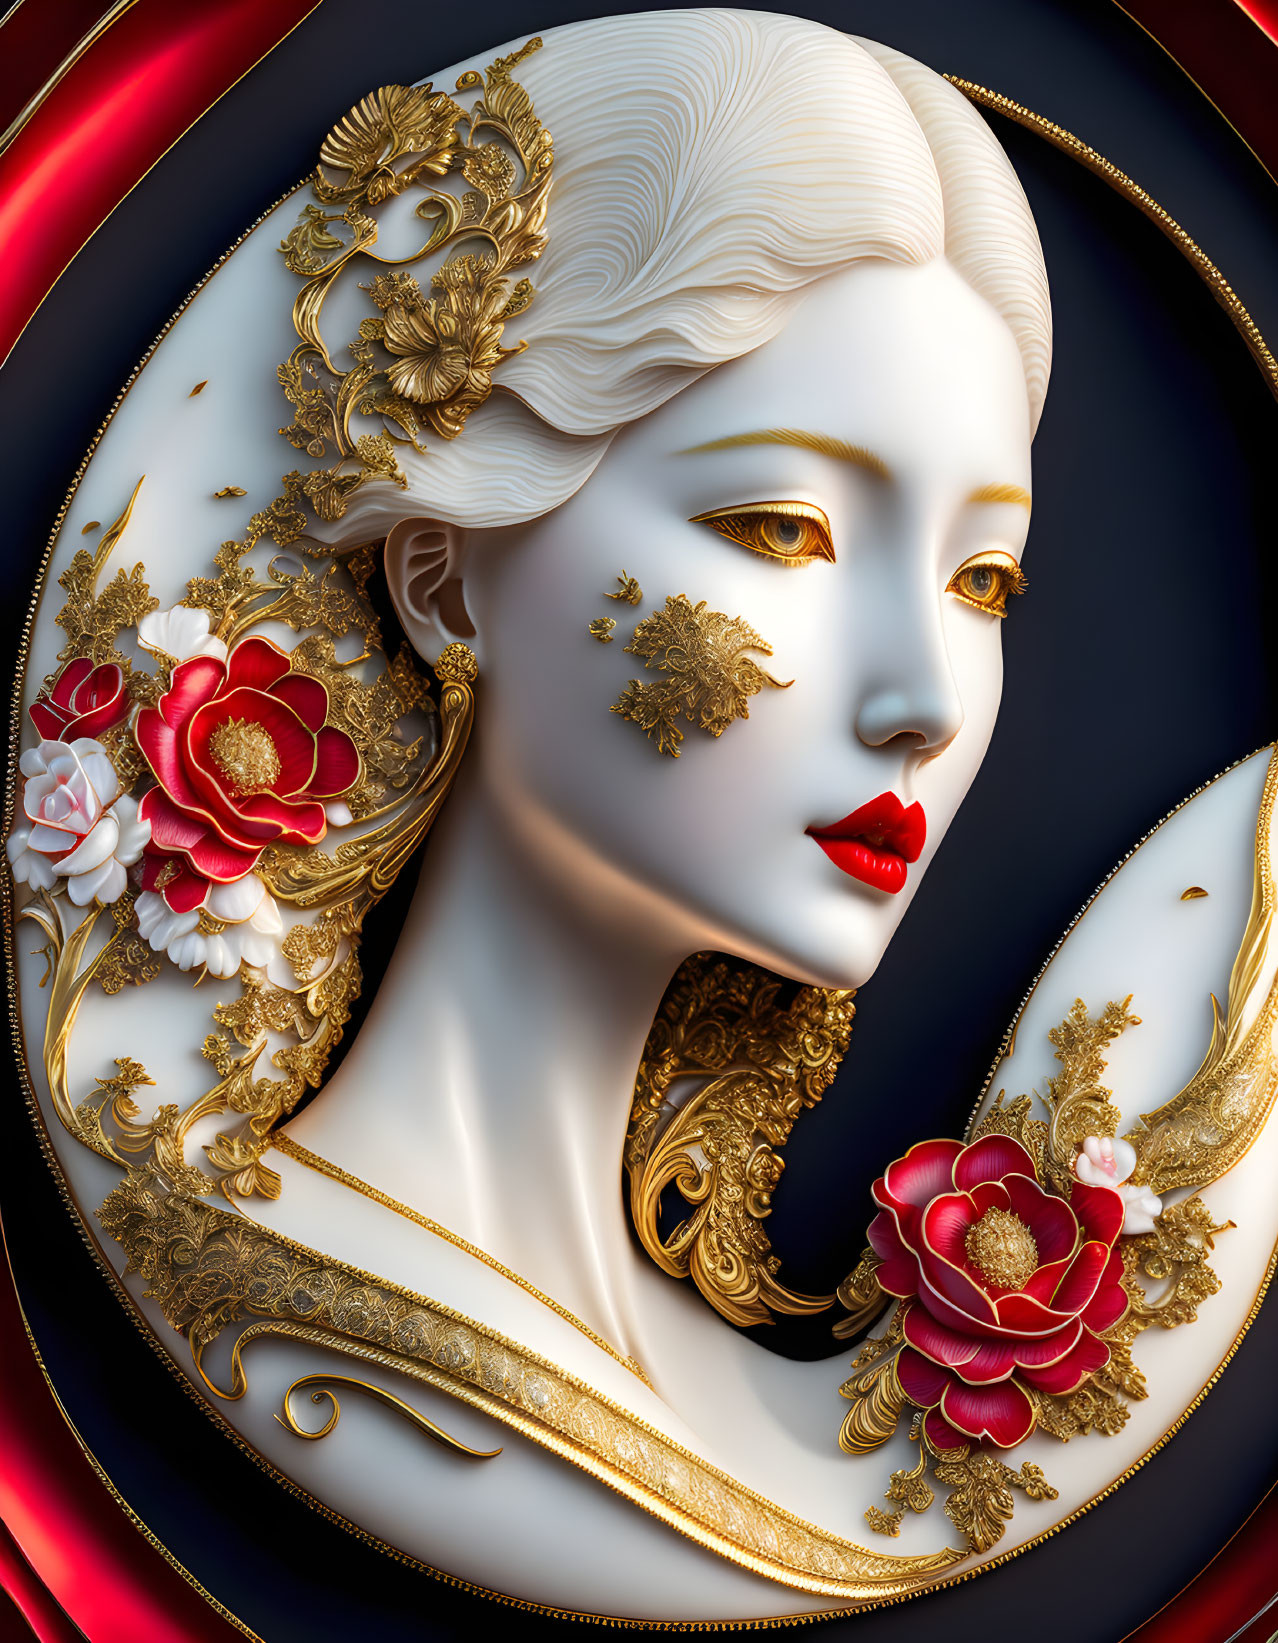 Elegant 3D illustration of porcelain-skinned female with gold floral accents